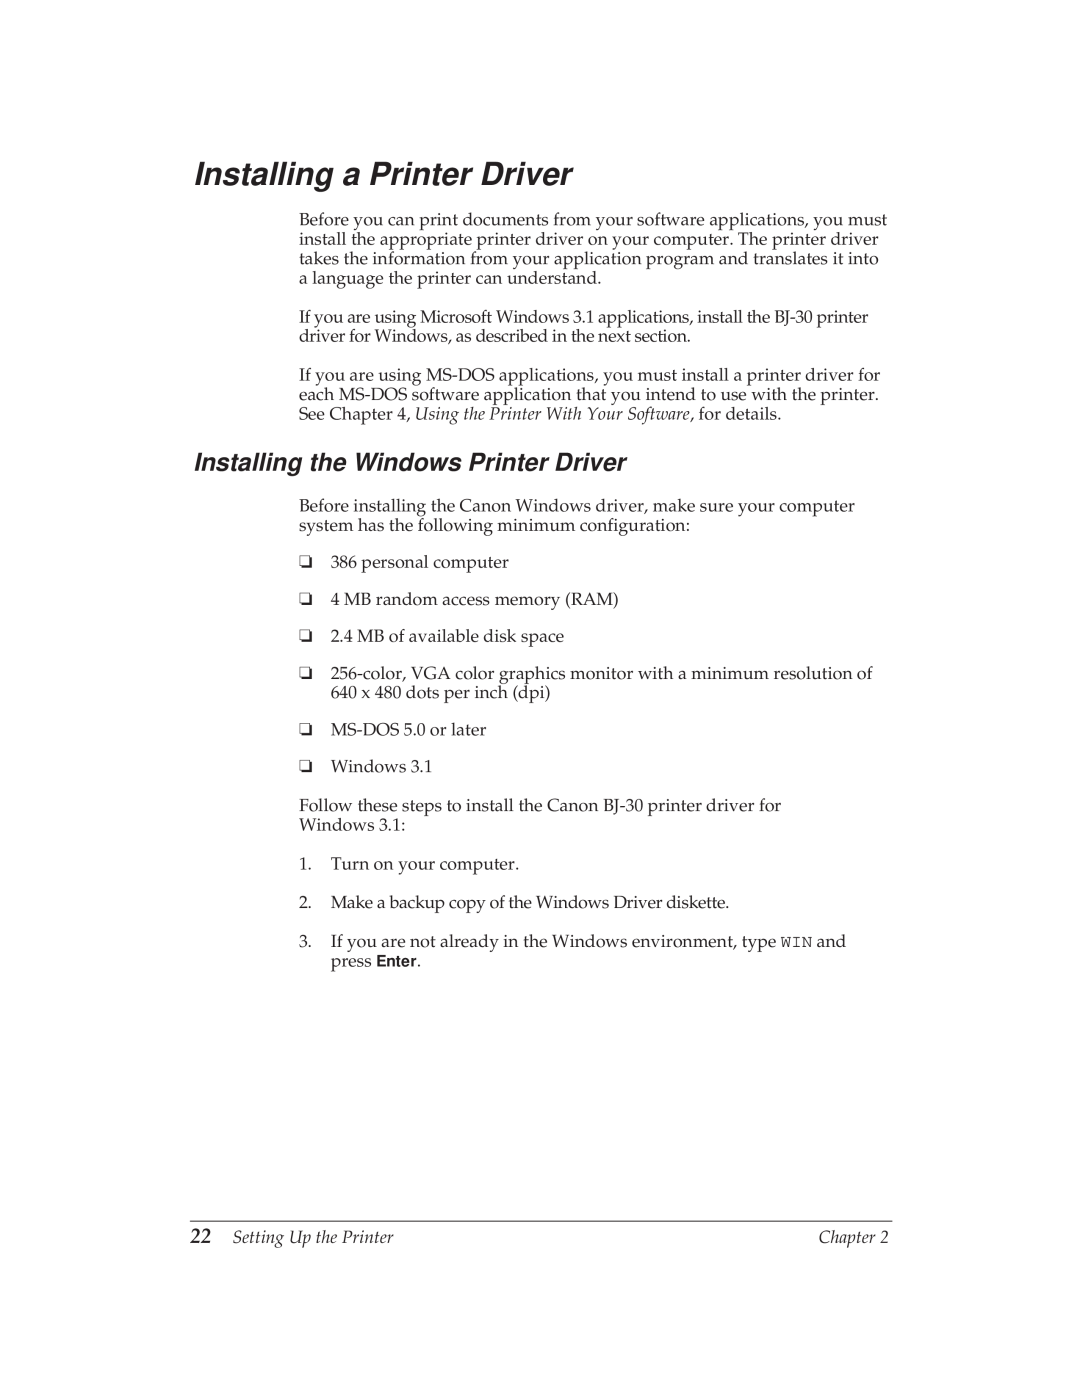 Canon BJ-30 manual Installing a Printer Driver, Installing the Windows Printer Driver 